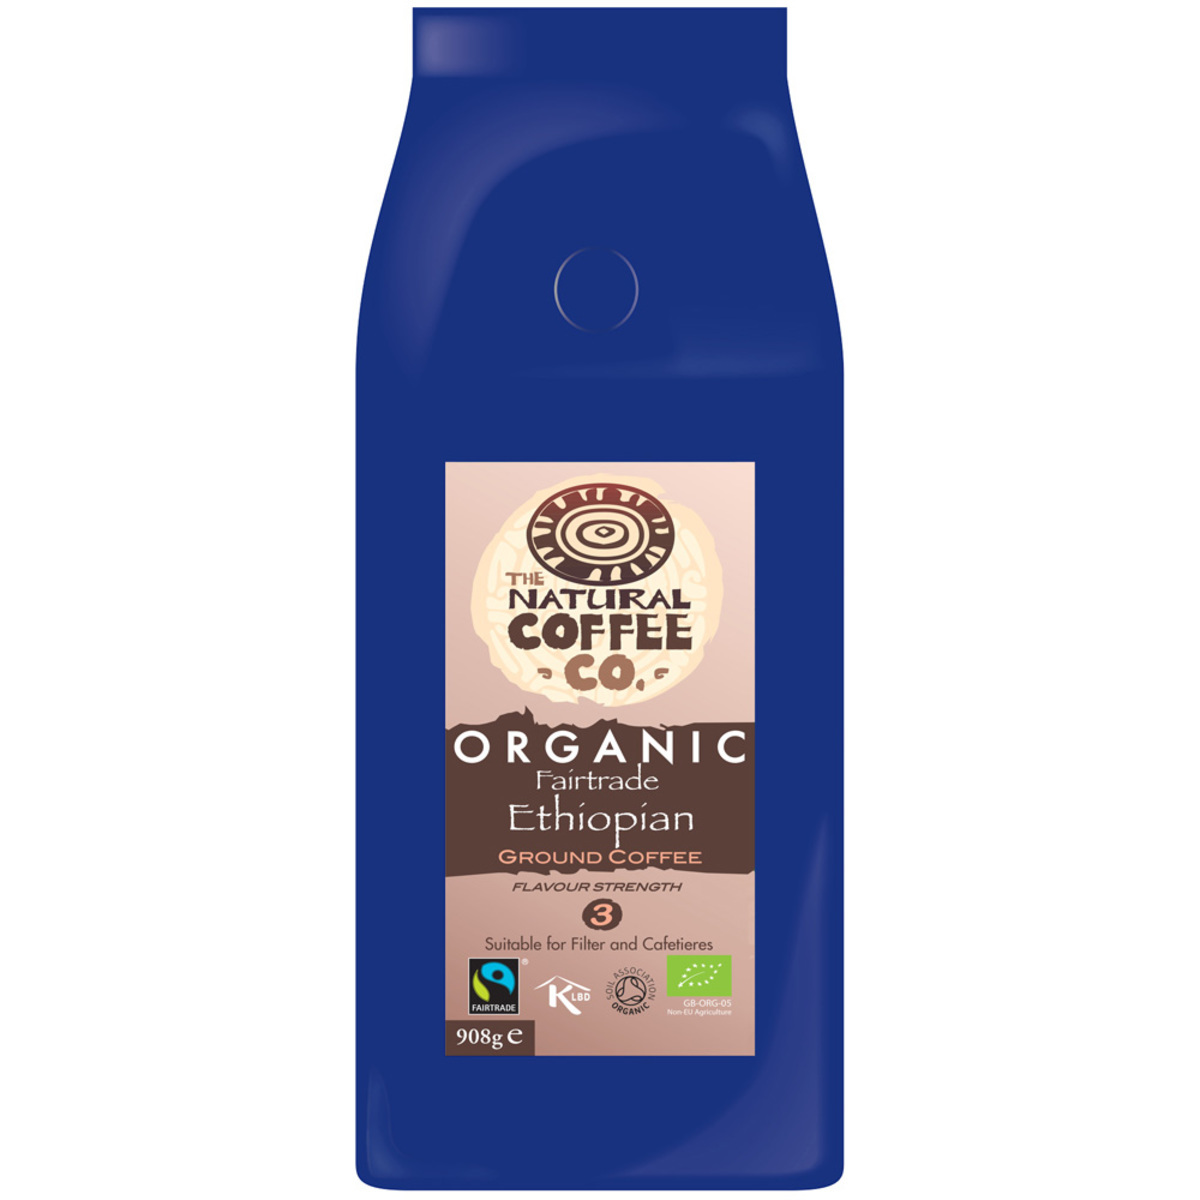 The Natural Coffee Co. Organic Ethiopian Ground Coffee